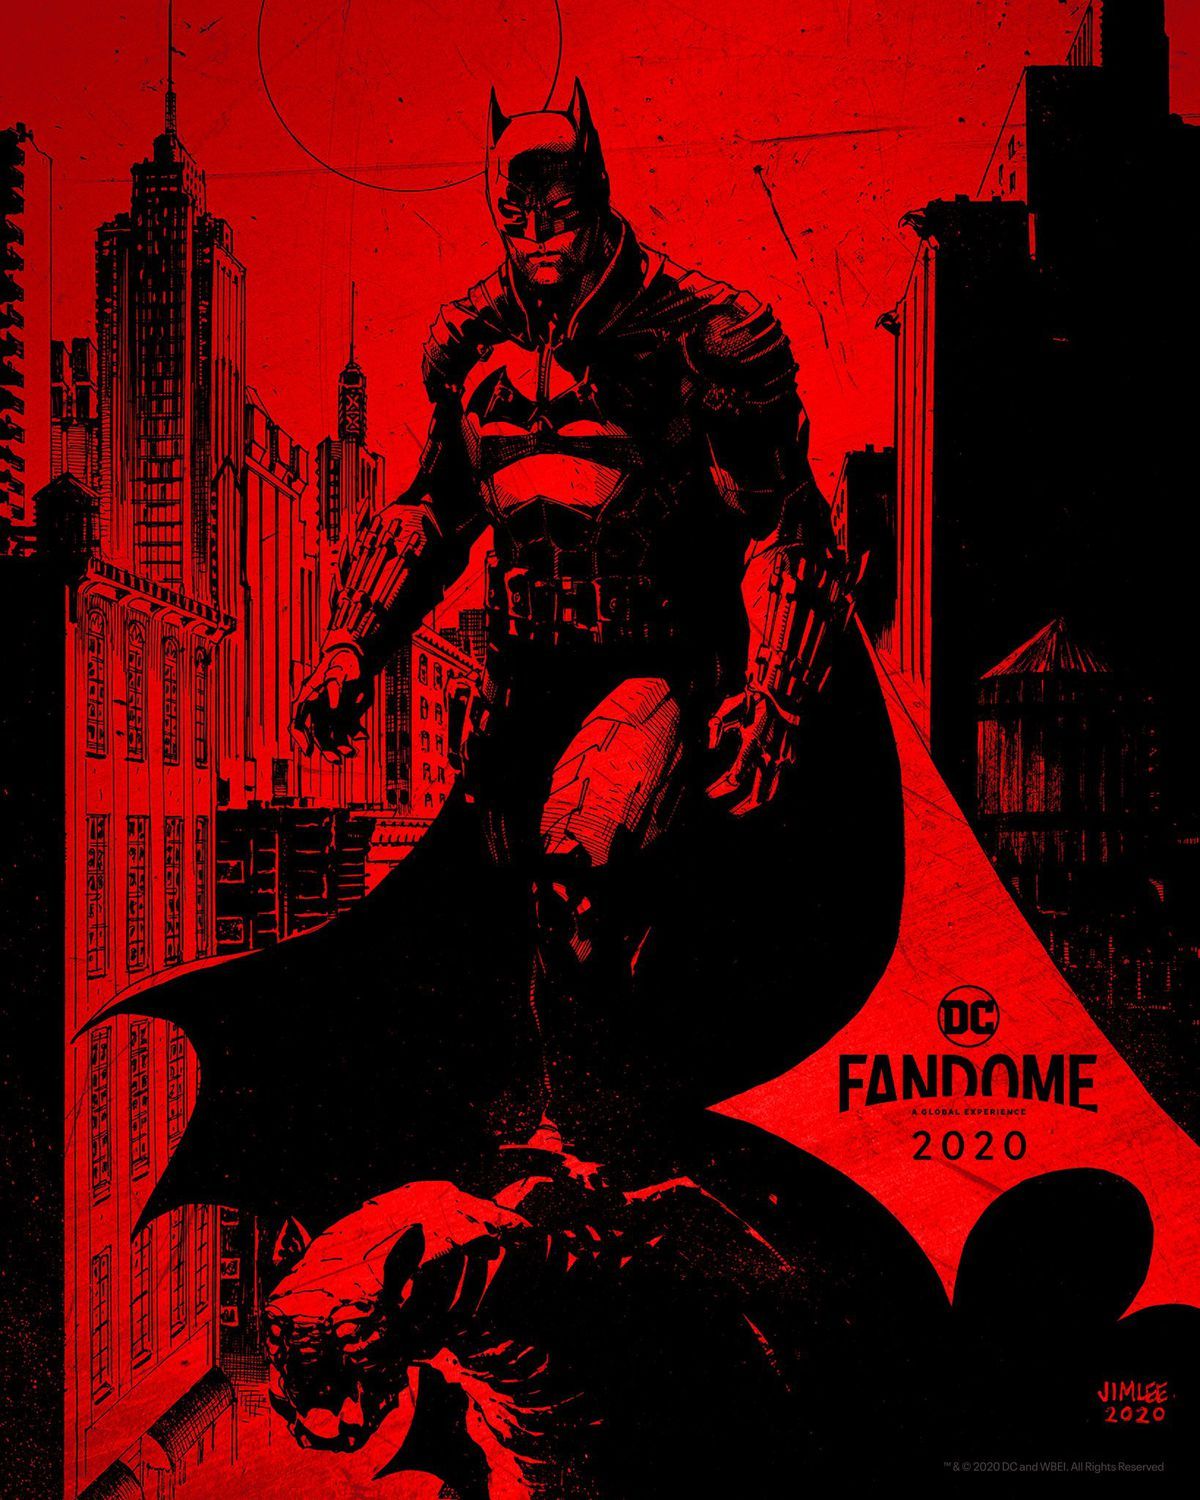 First The Batman movie posters set the Robert Pattinson reboot's tone